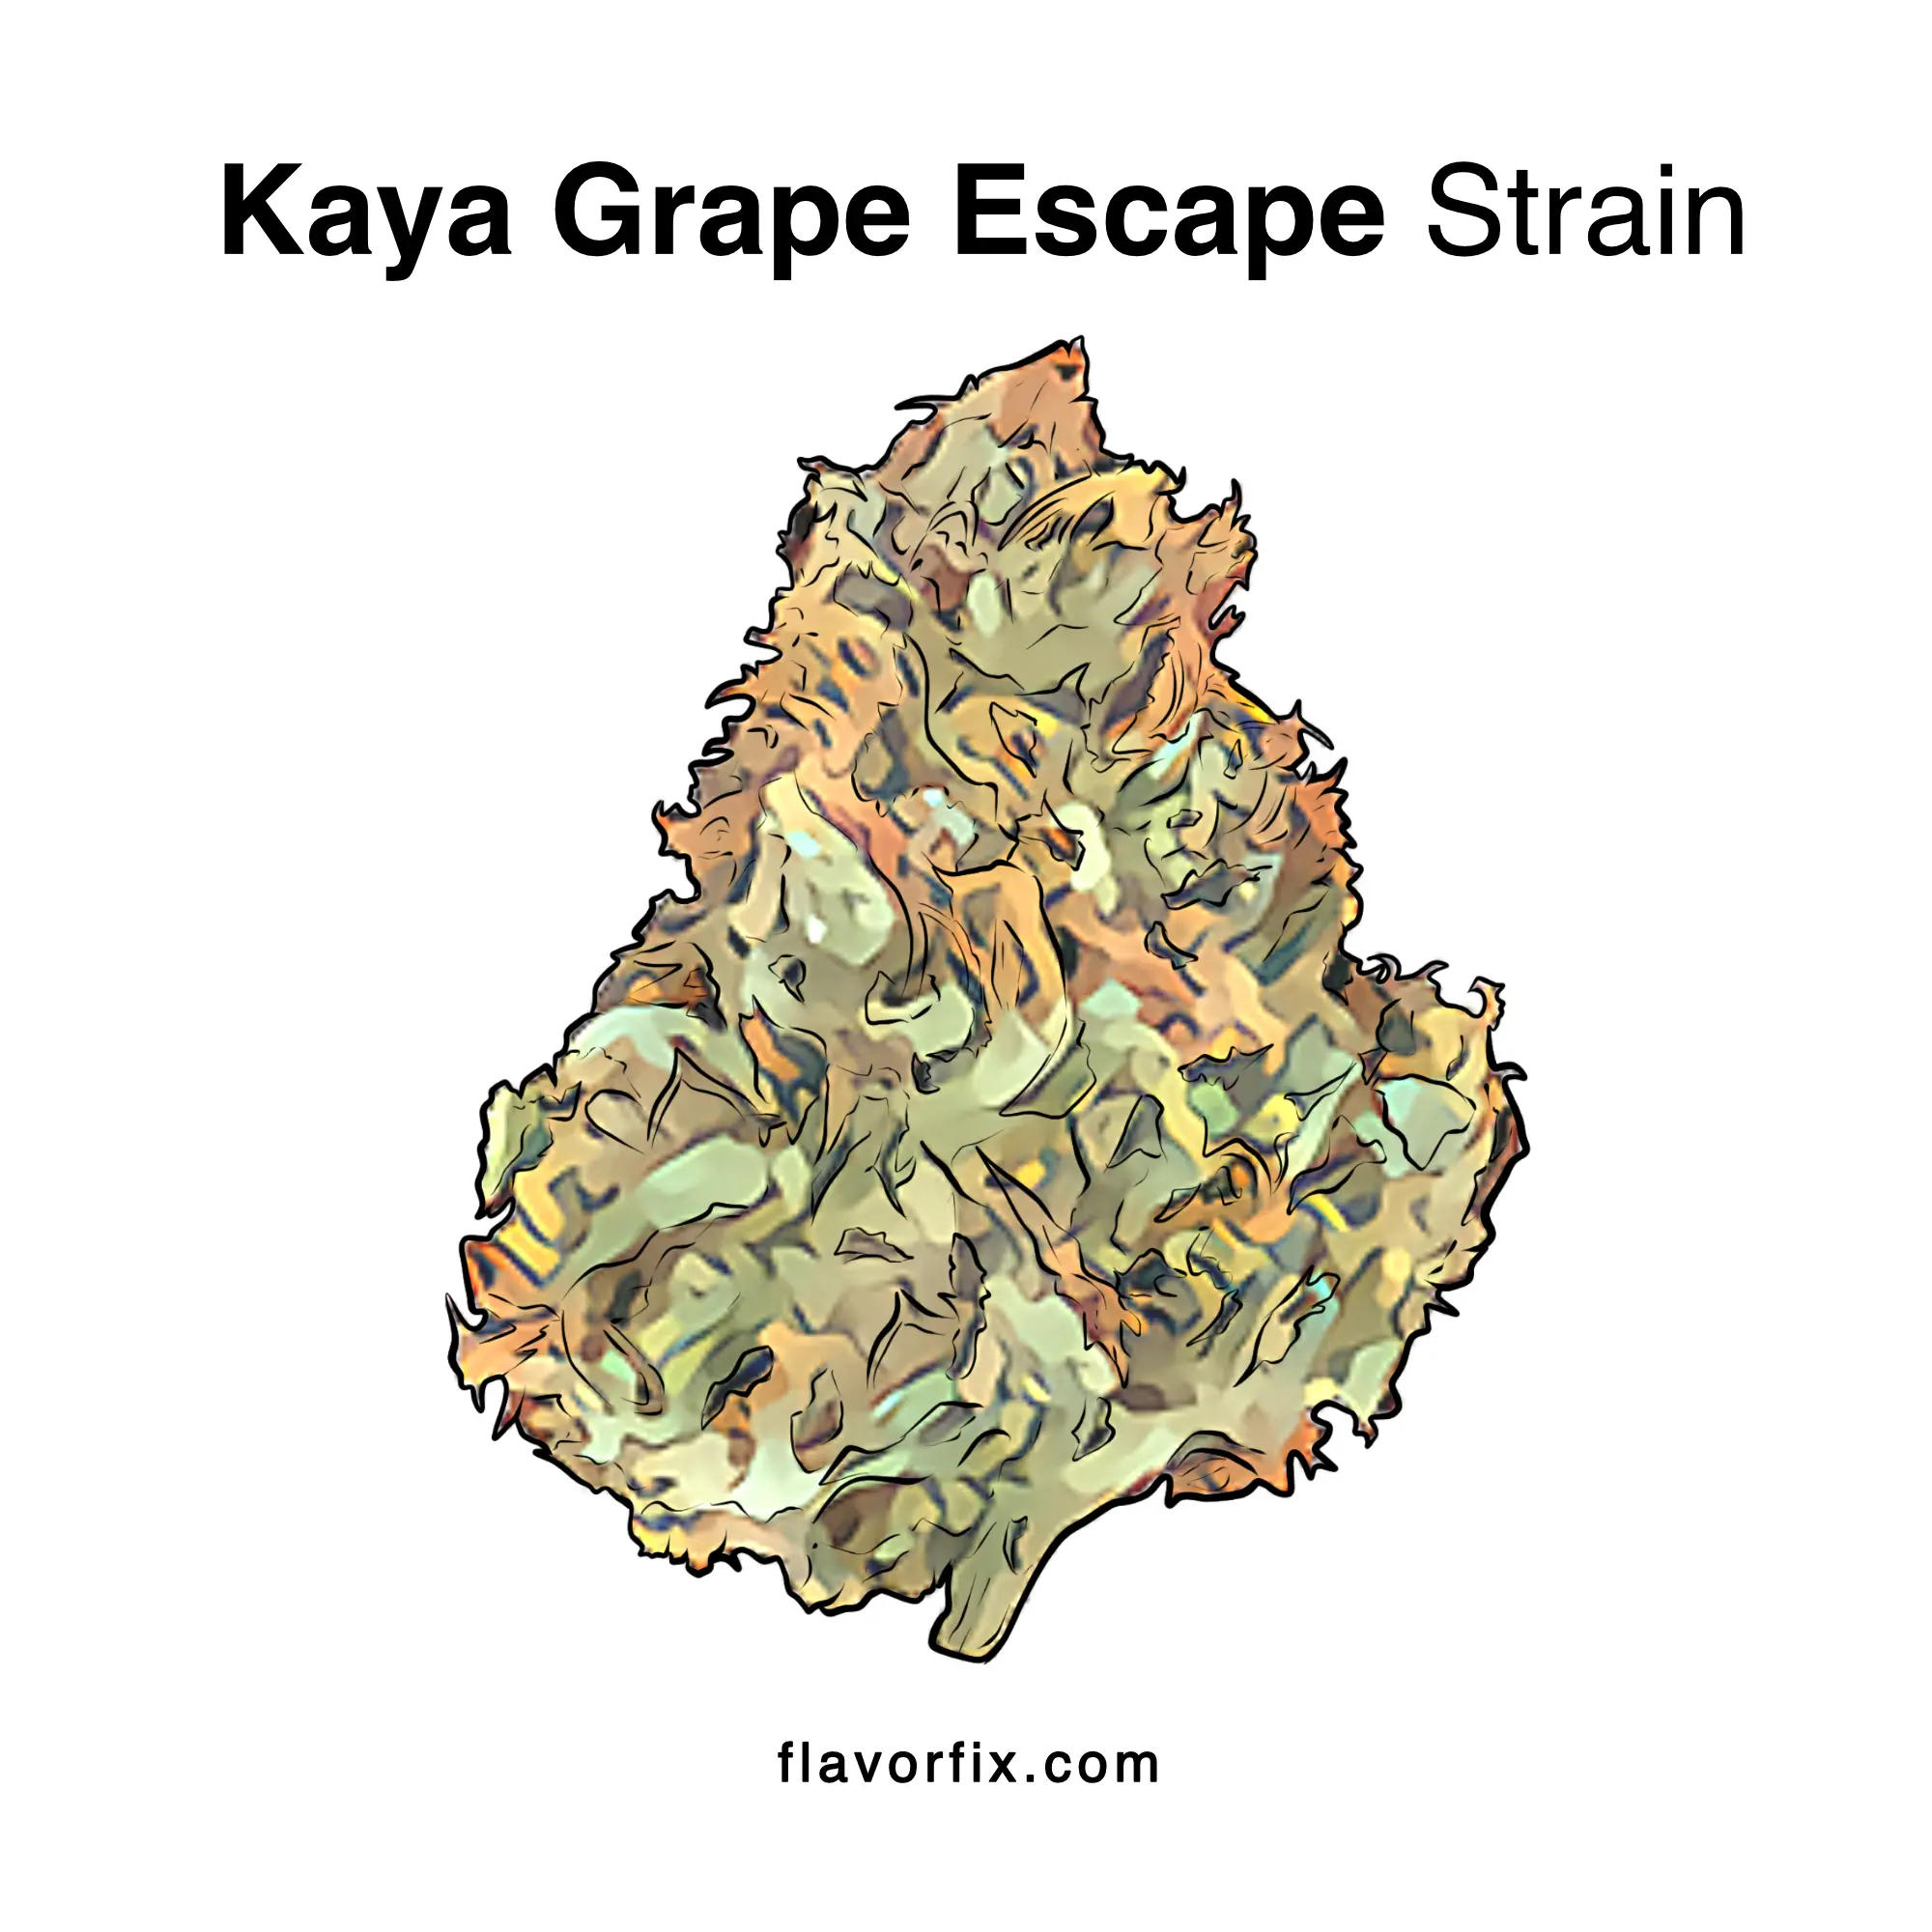 Kaya Grape Escape Strain